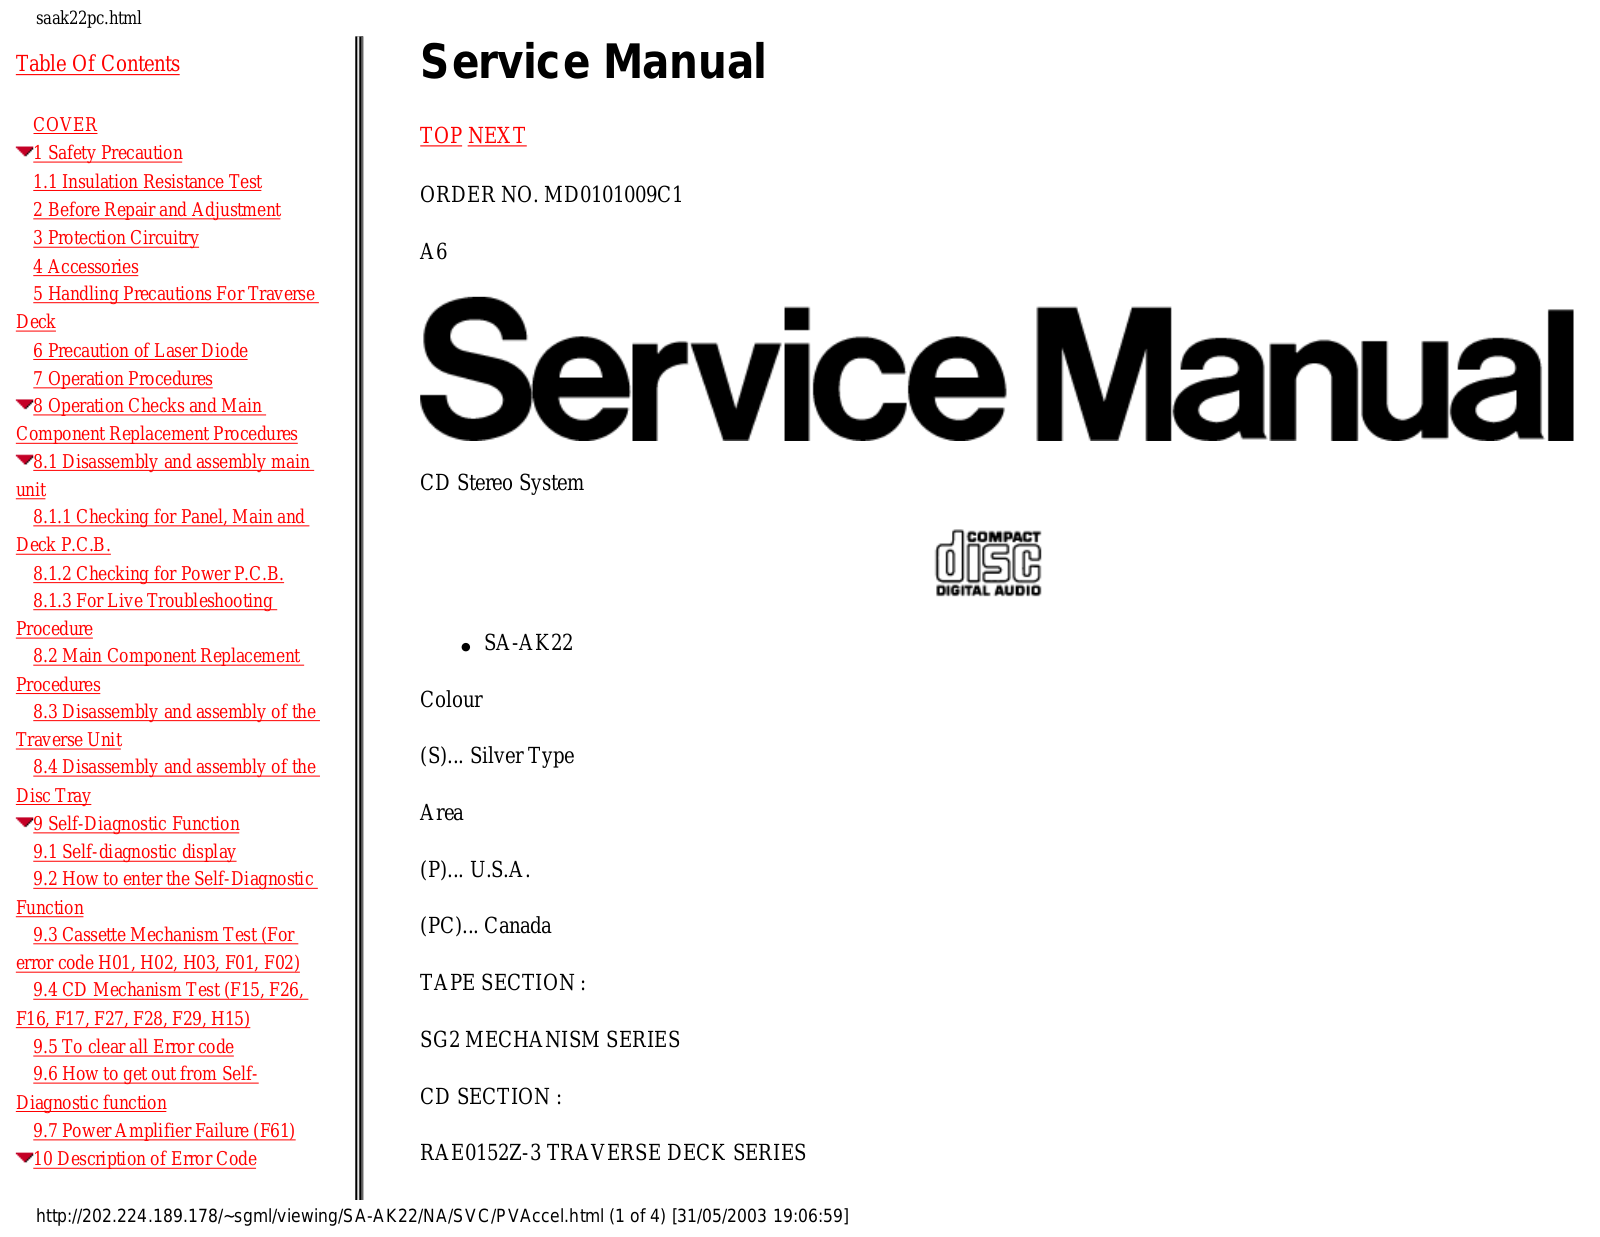 Panasonic SAAK-22 Service manual